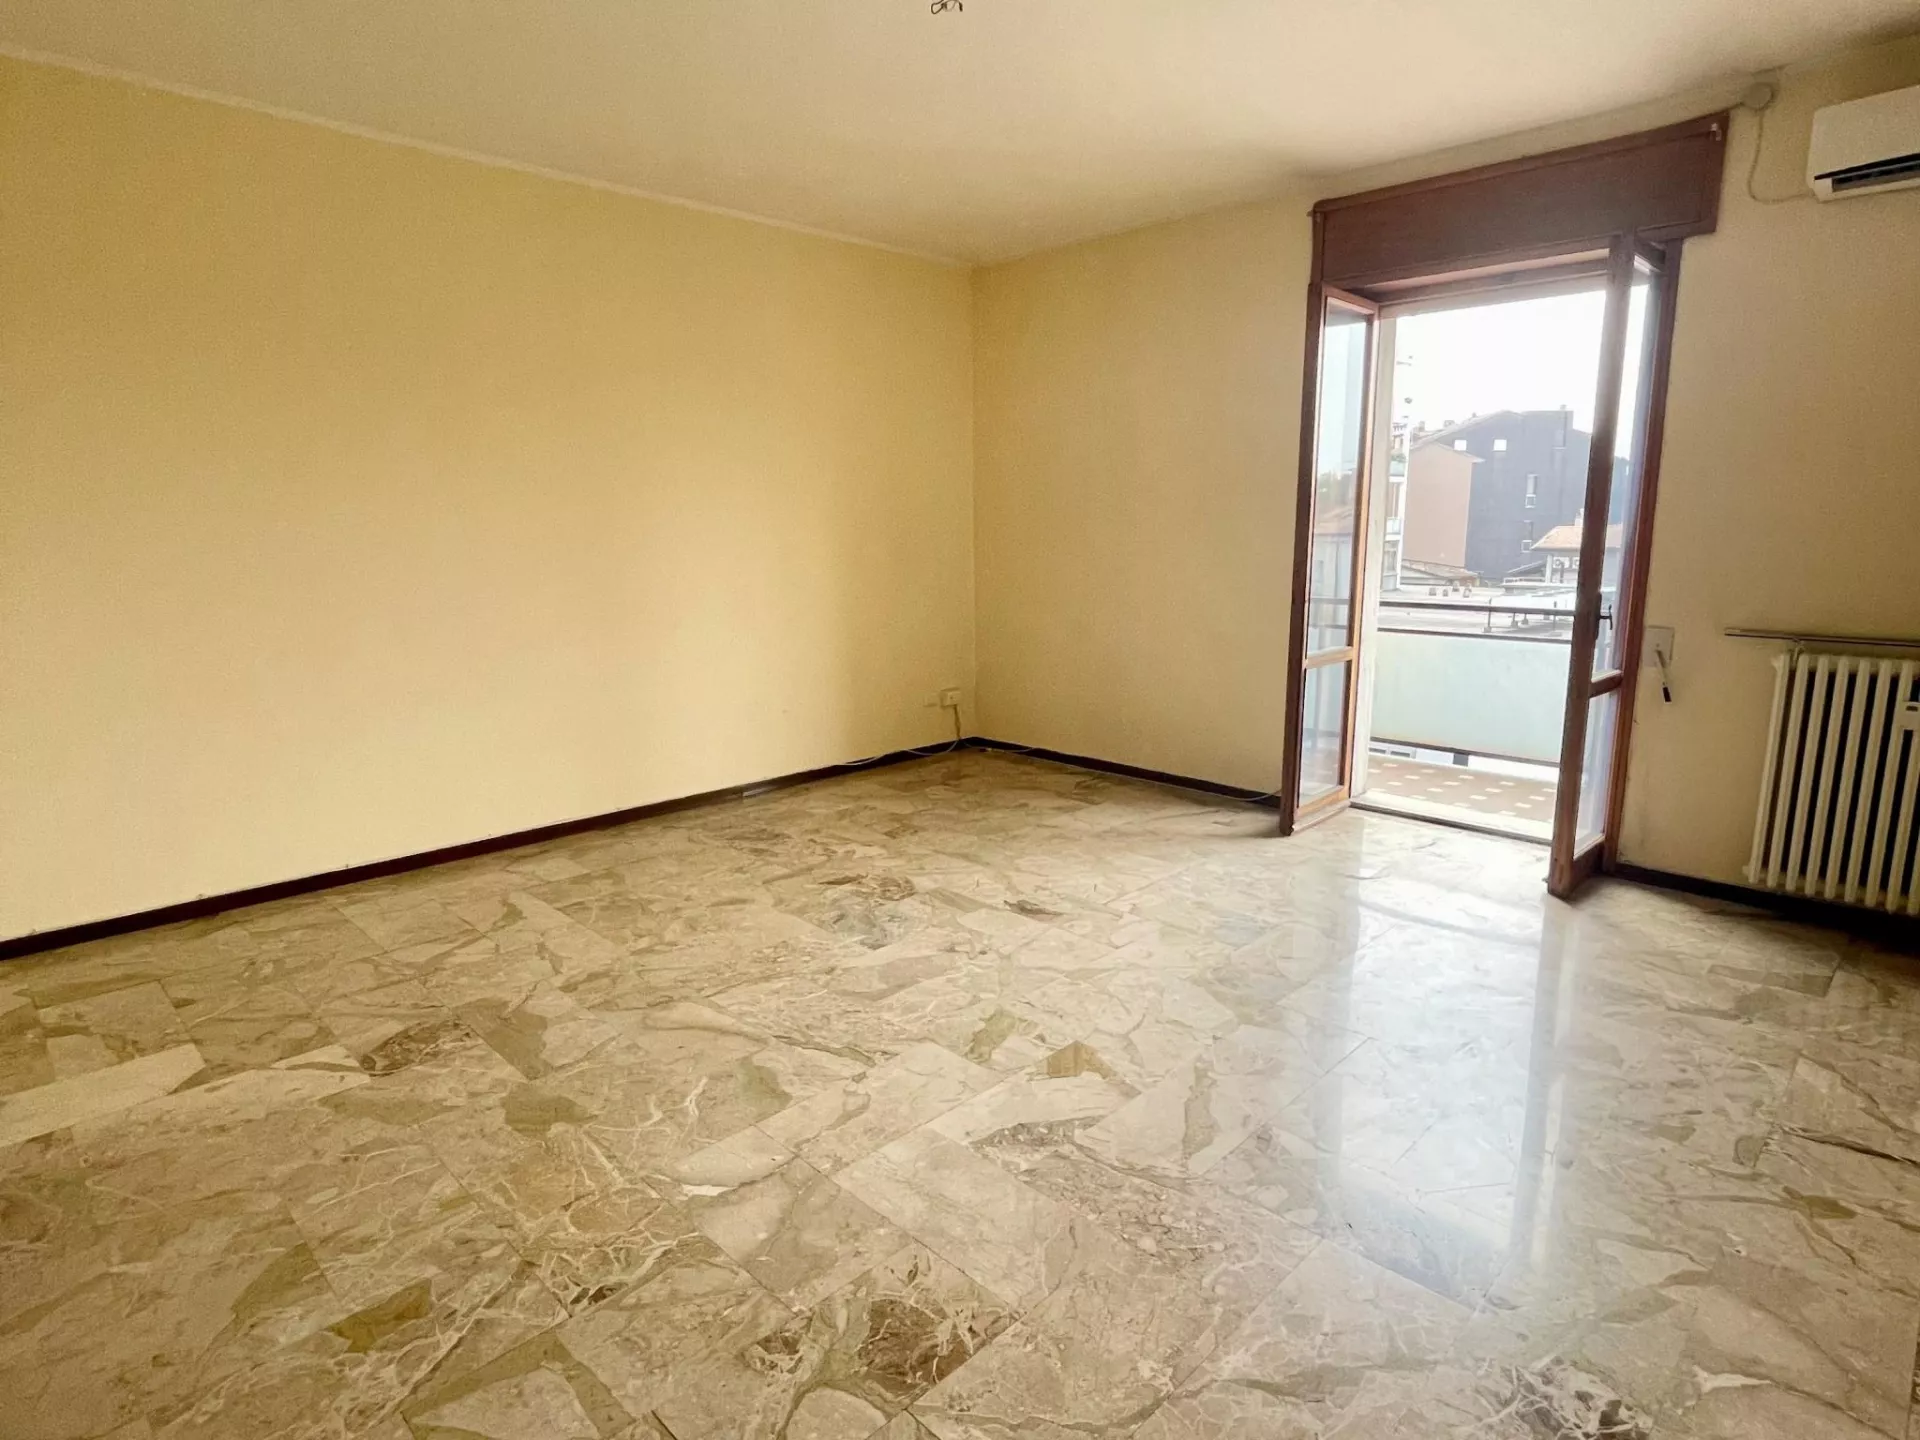 Immagine per Appartamento in vendita a Piacenza via Manfredi 12